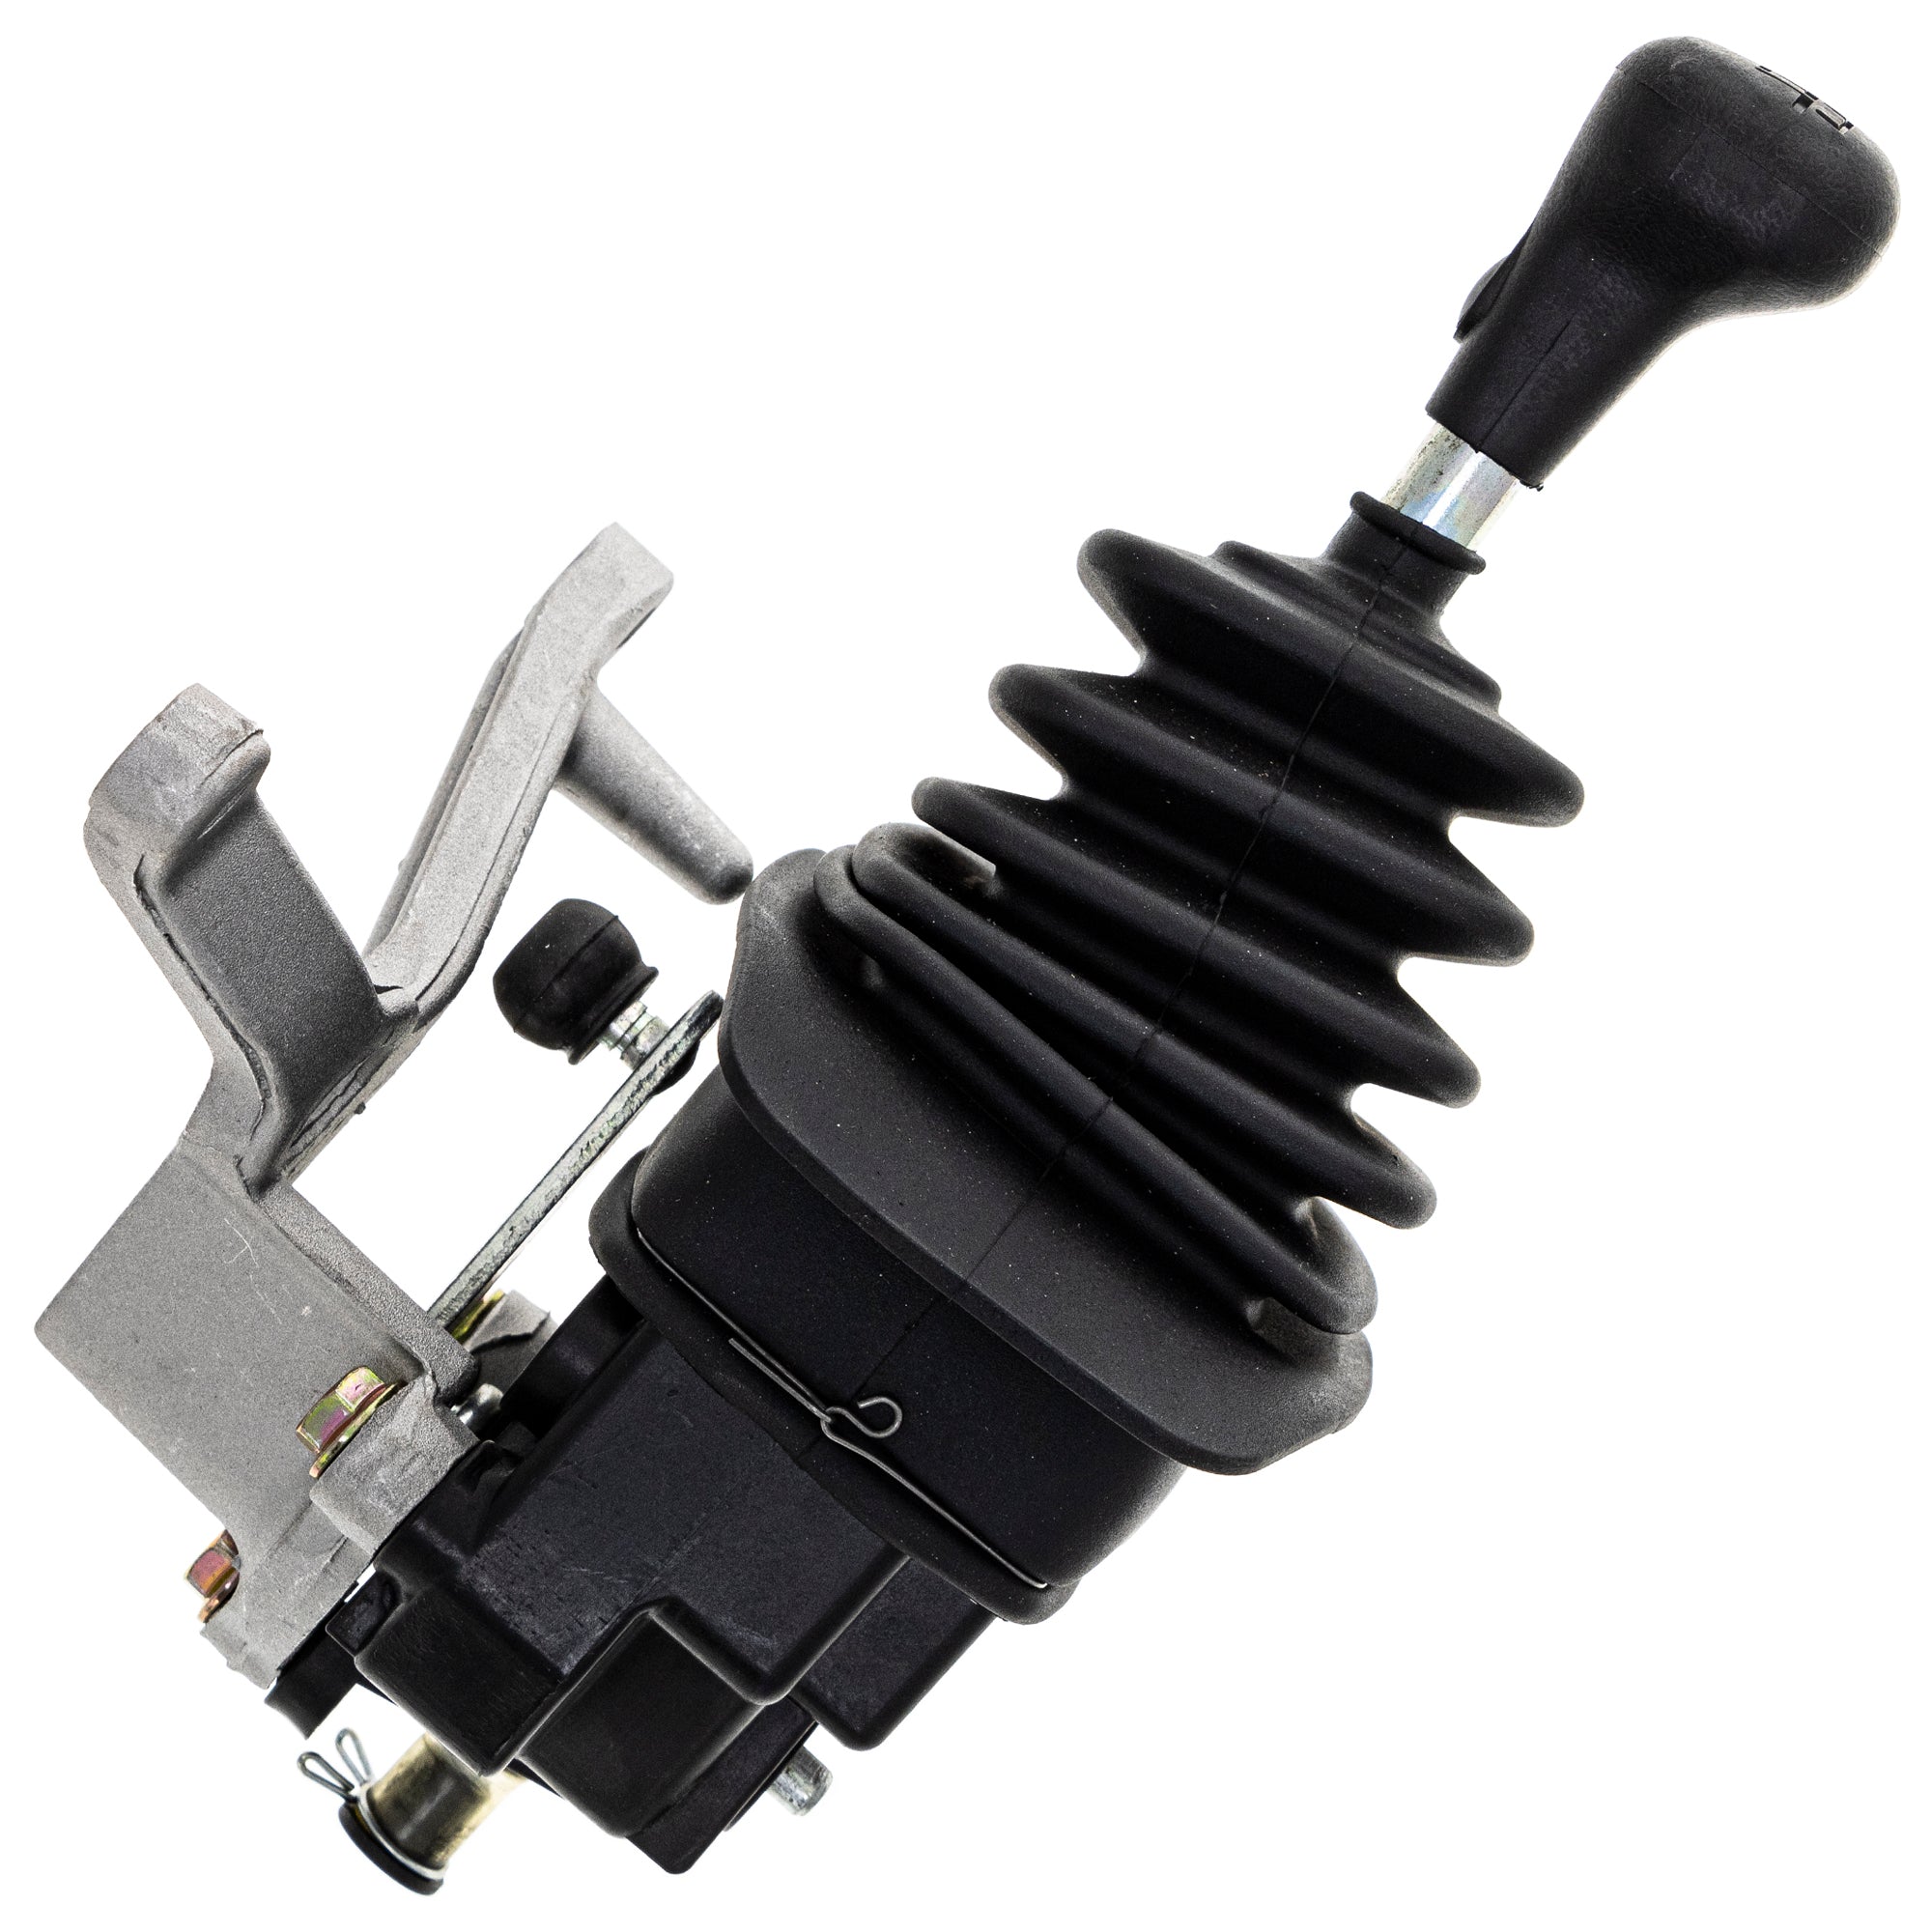 Gear Shifter Shaft With Rod Linkage 519-CGS2224A For Yamaha 5UH-18300-02-00 5KM-18300-03-00